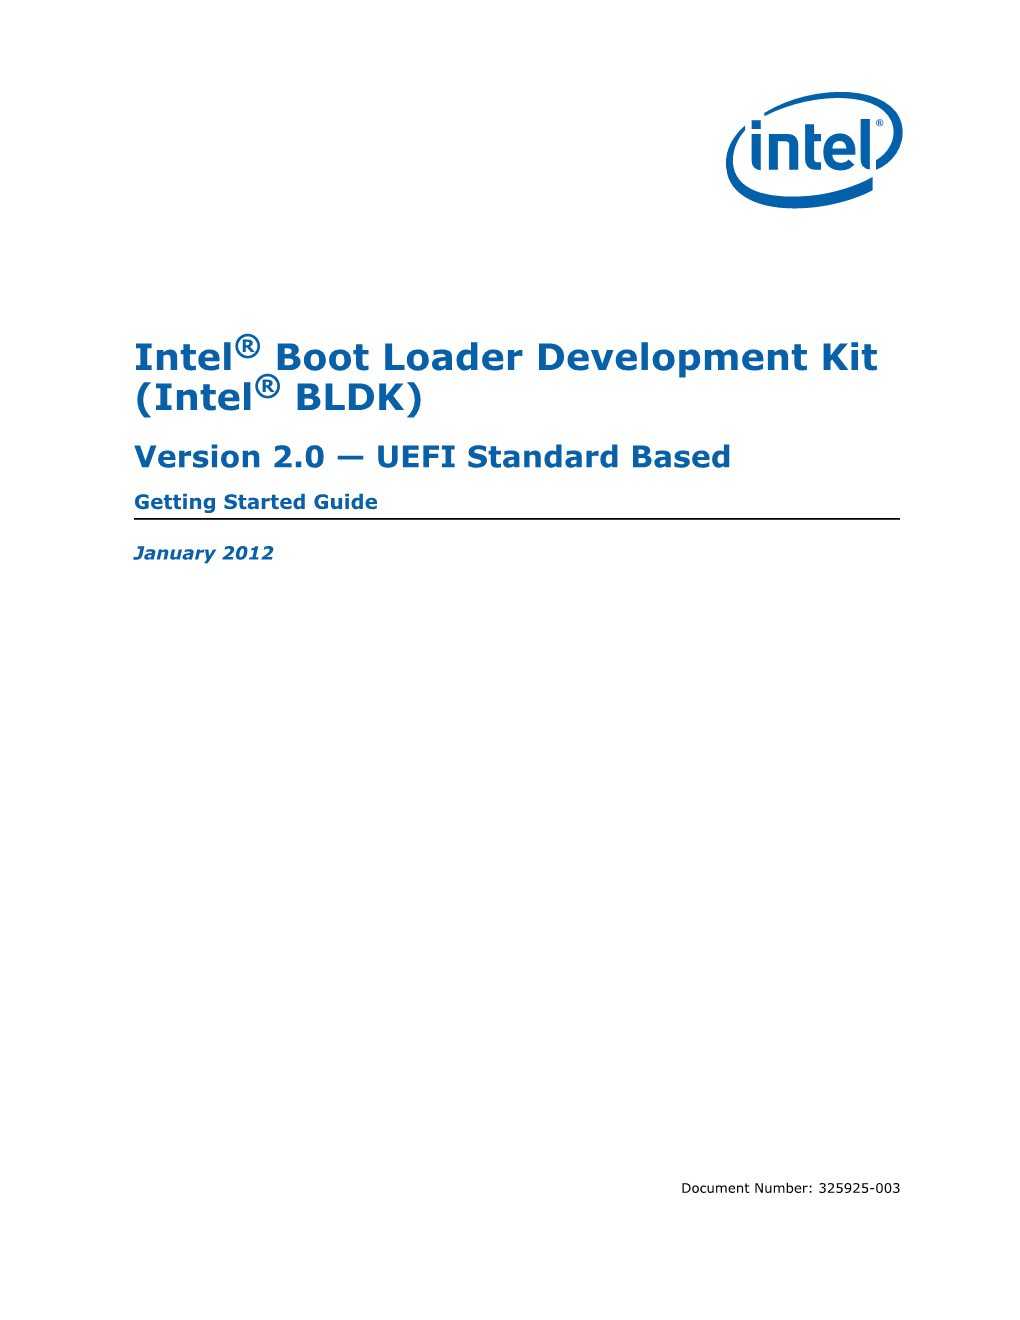 Intel® Boot Loader Development Kit (Intel® BLDK) Version 2.0 — UEFI Standard Based Getting Started Guide